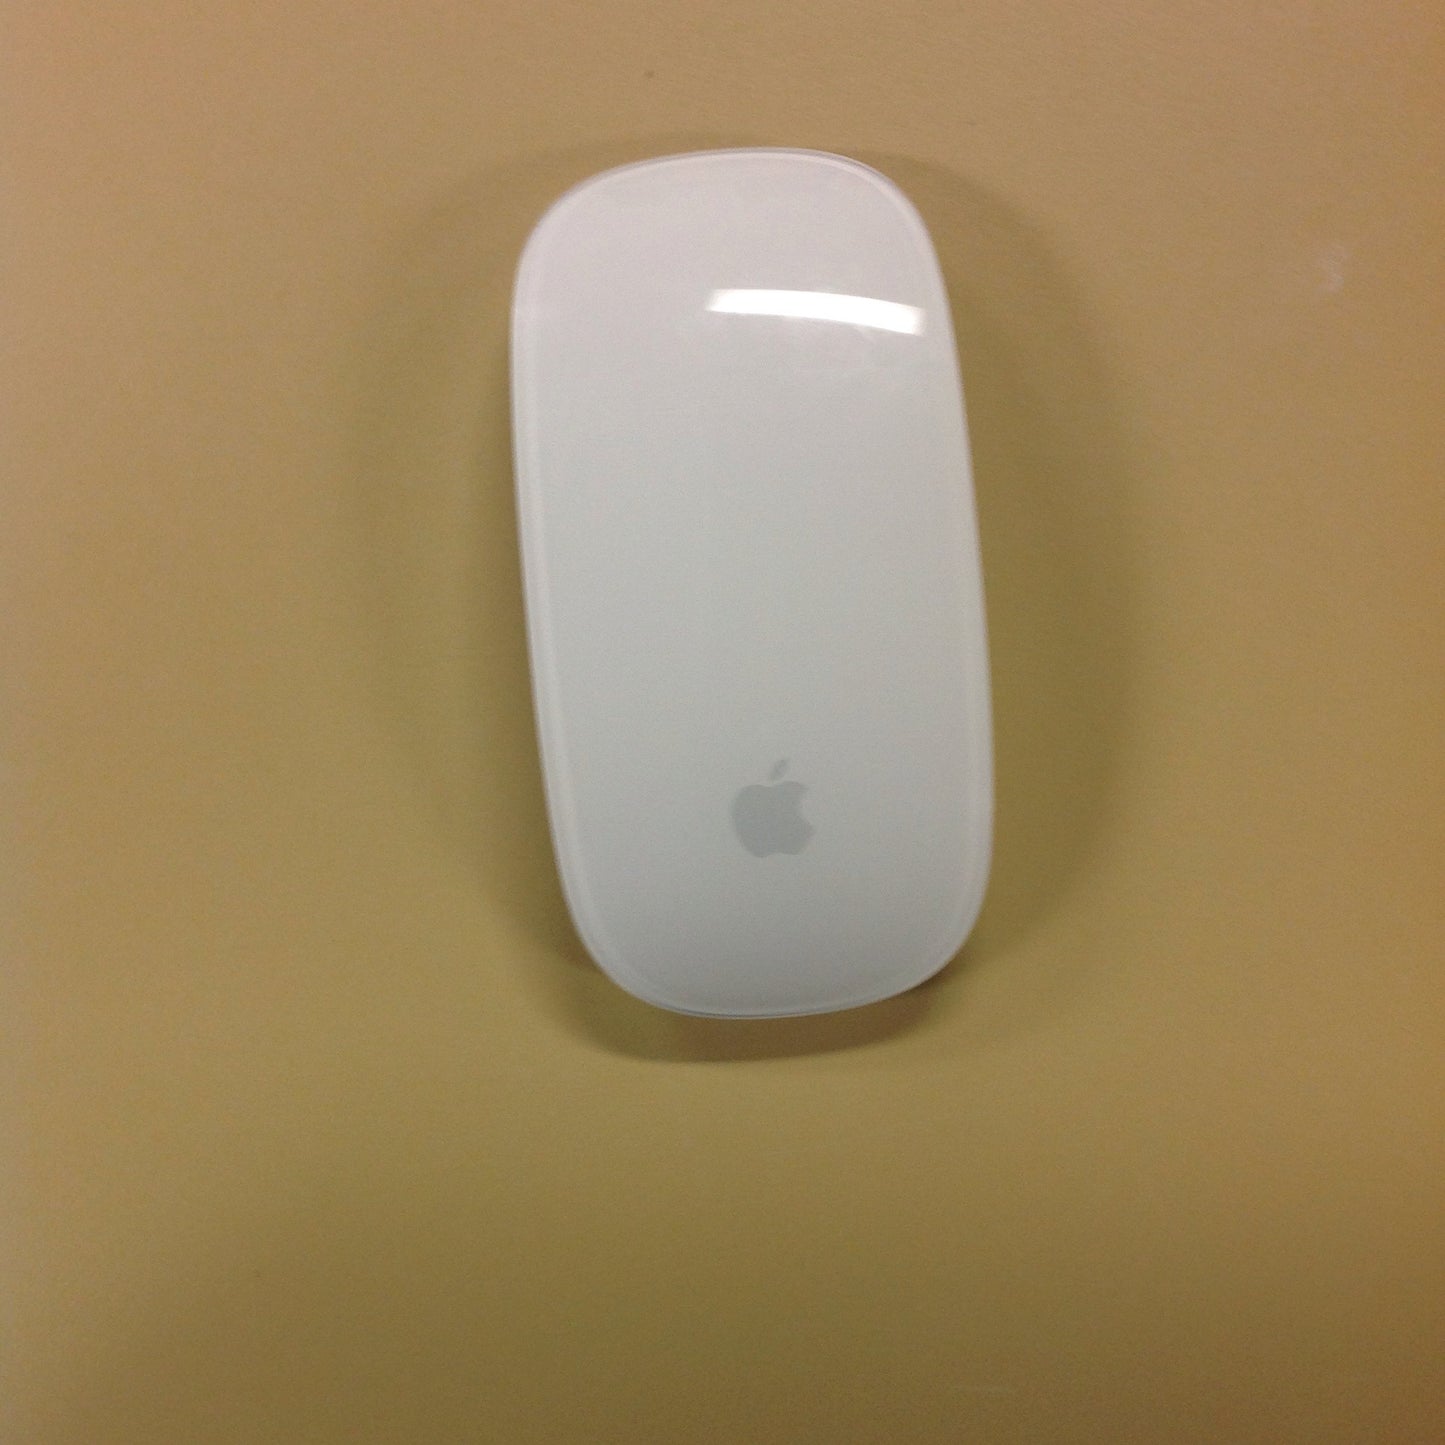 Apple Mice Mouse